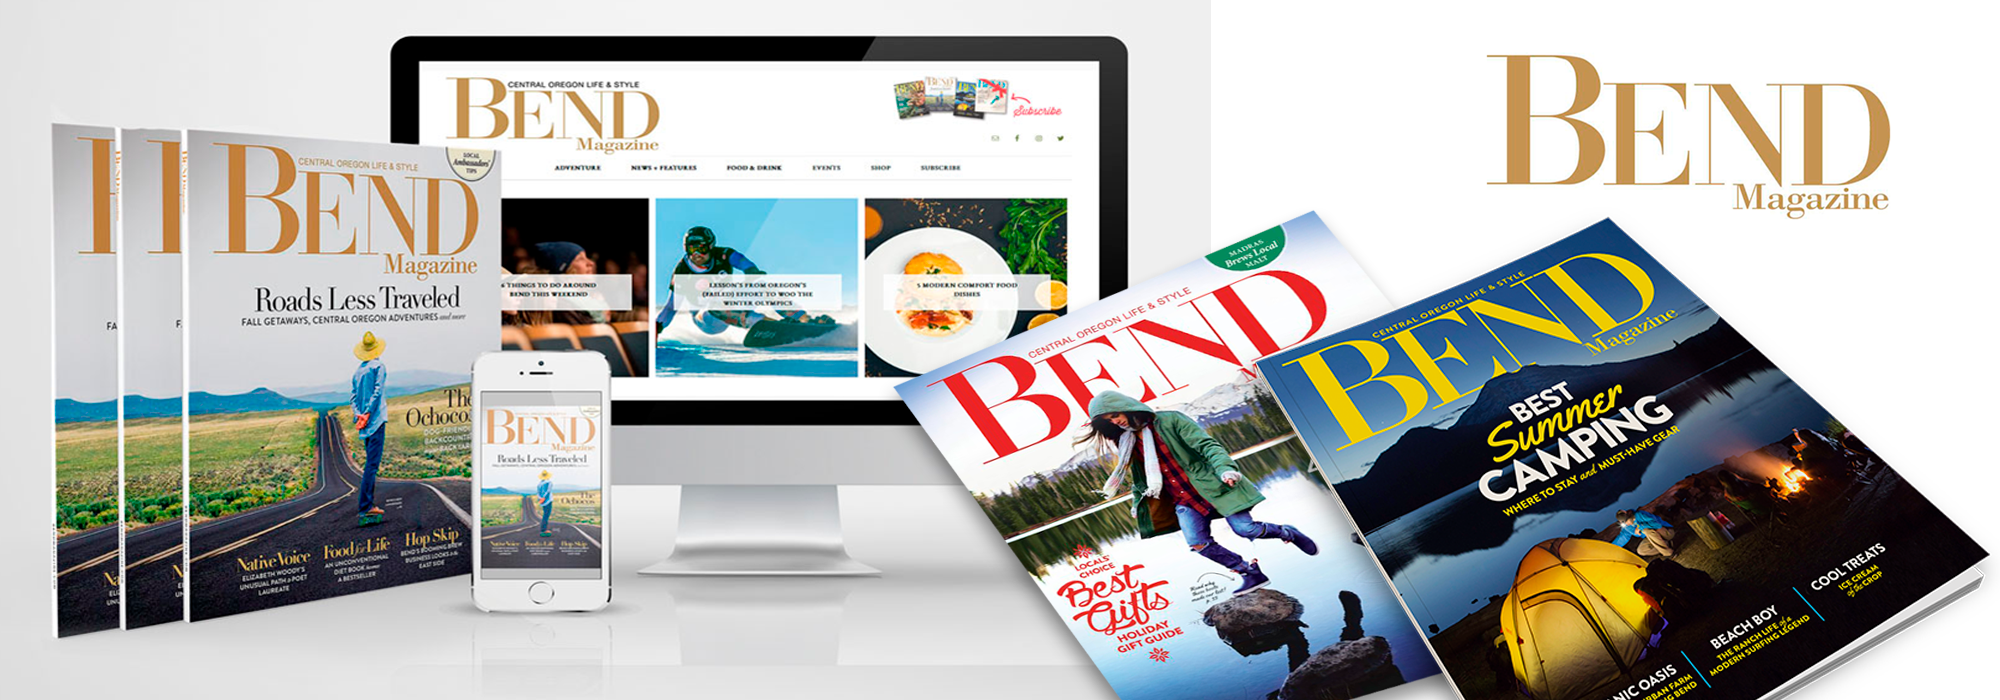 Bend Magazine brand design and creative director